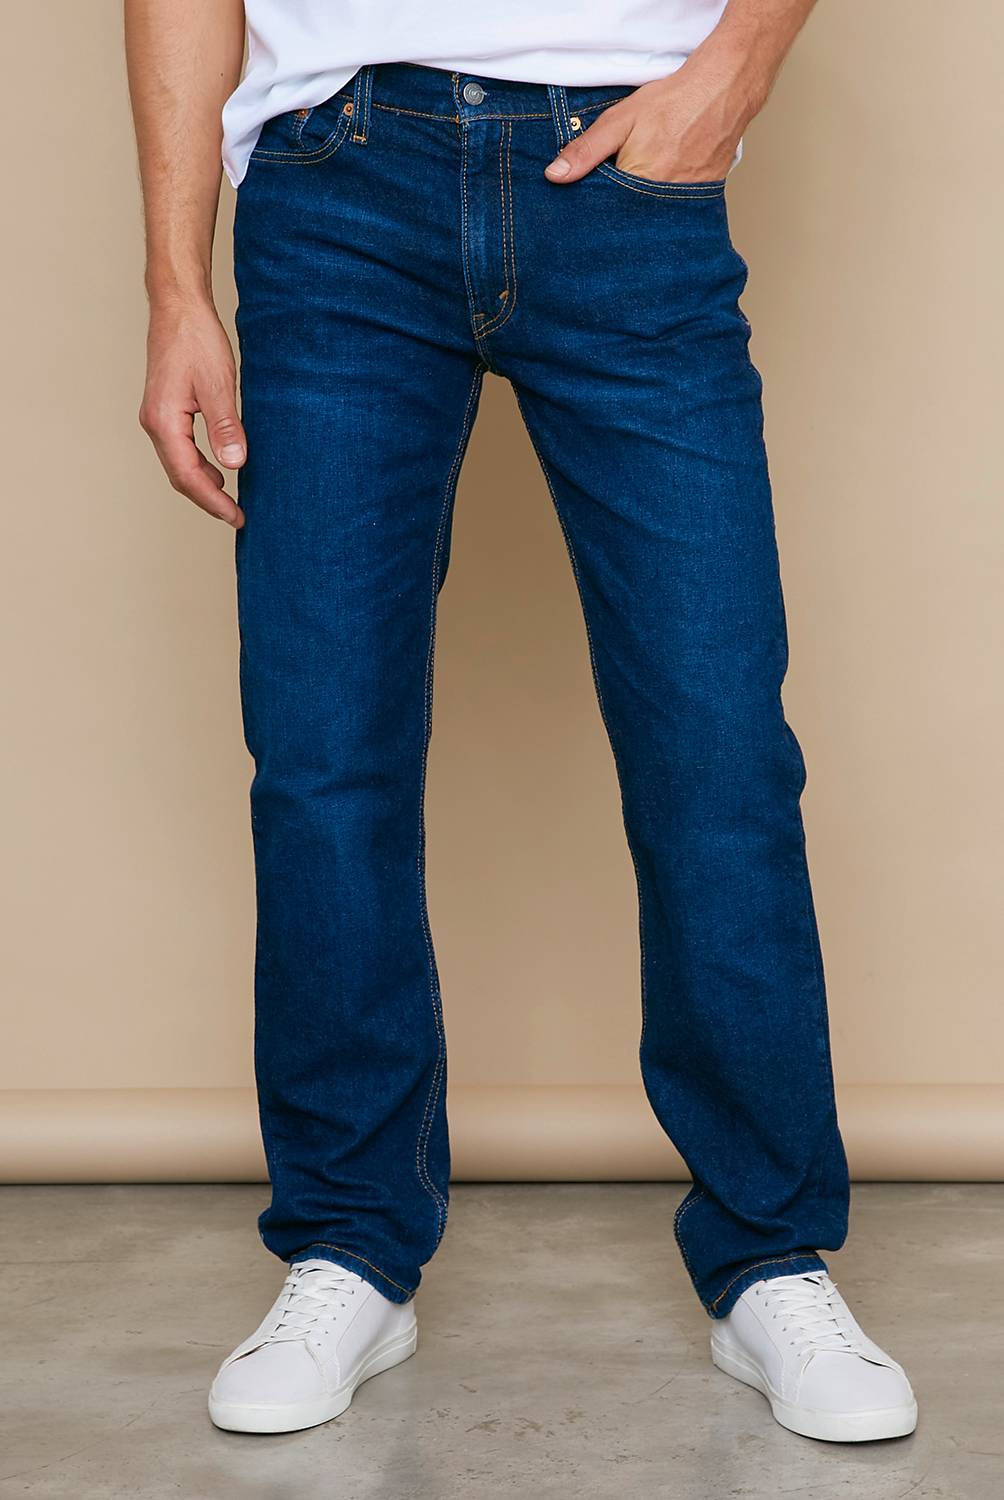 LEVIS - Jeans Regular Straight 514 Hombre